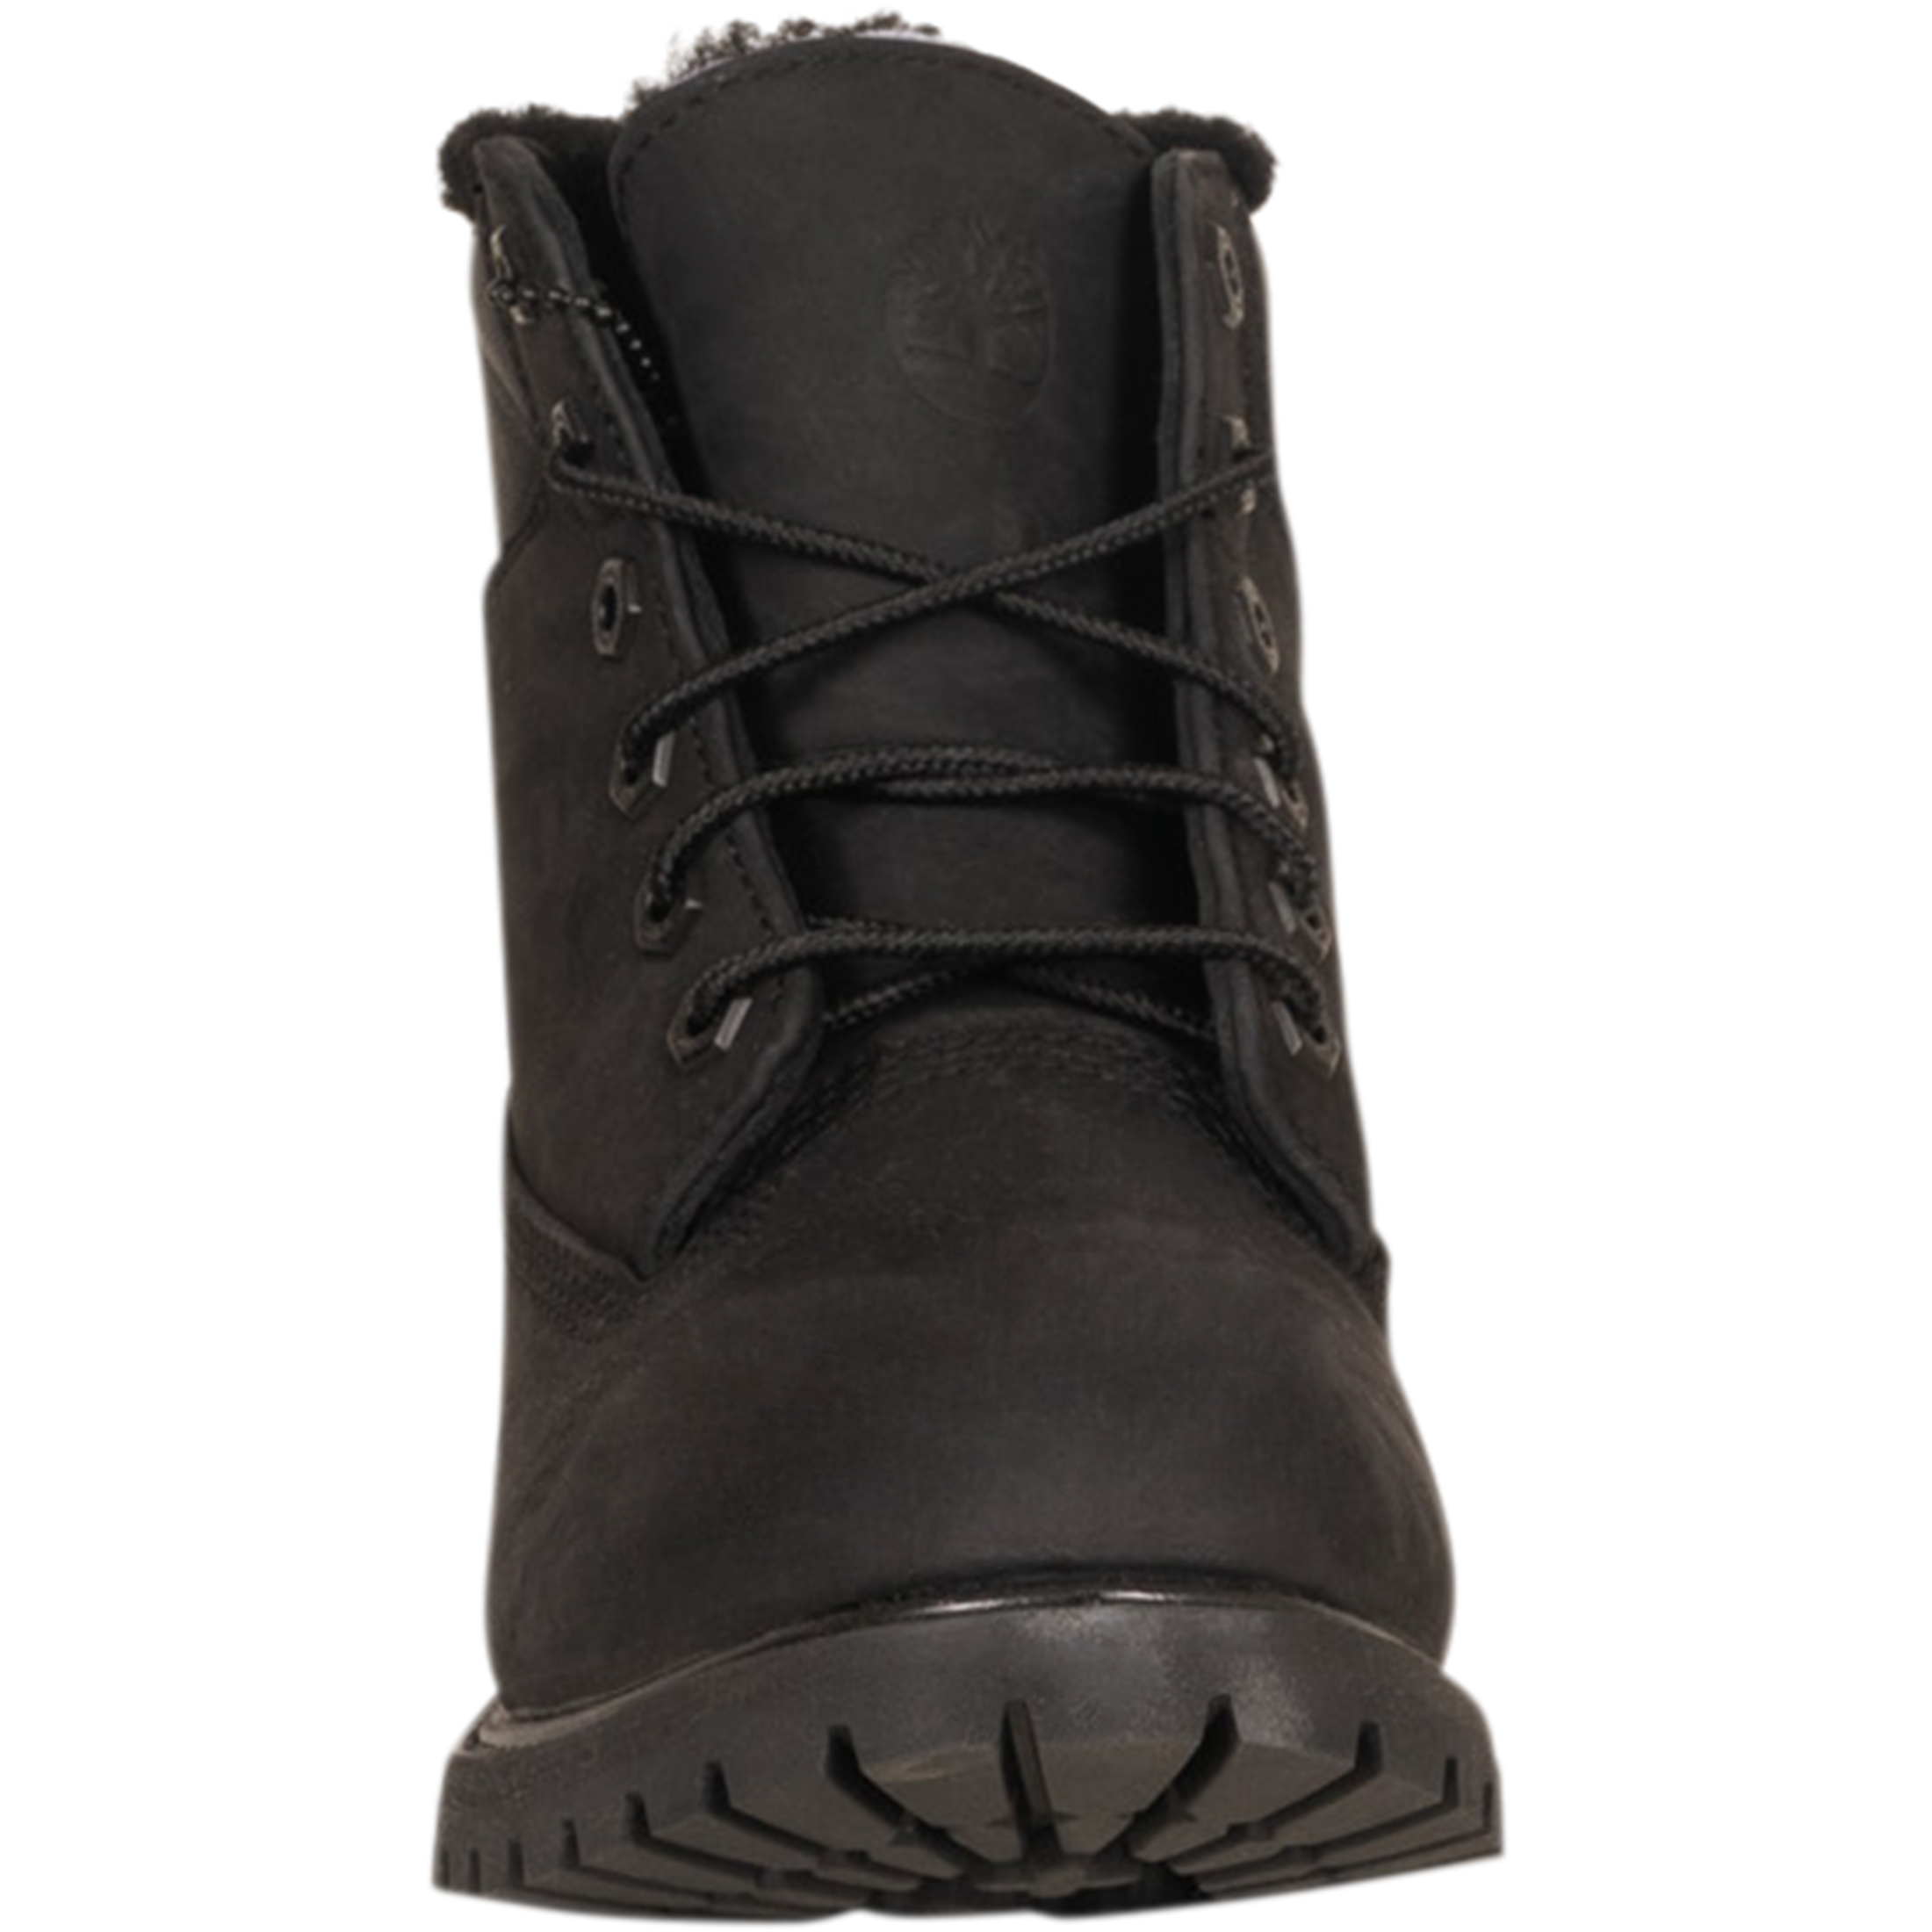 Timberland Premium 6 Inch Fur Lined Waterproof Boot - Black